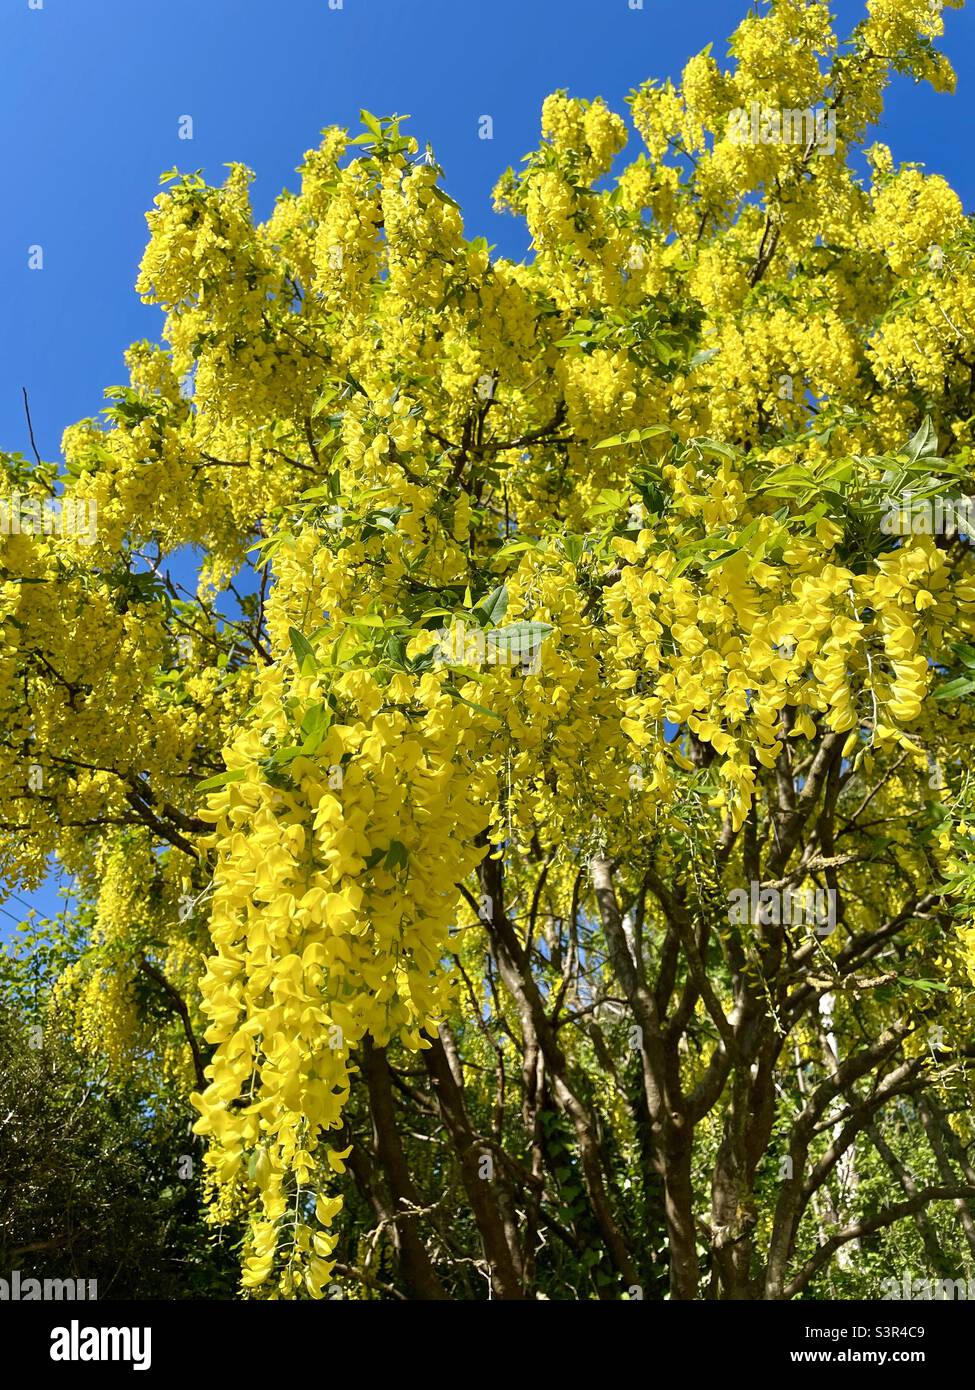 Flowering Laburnum tree against blue sky Stock Photo